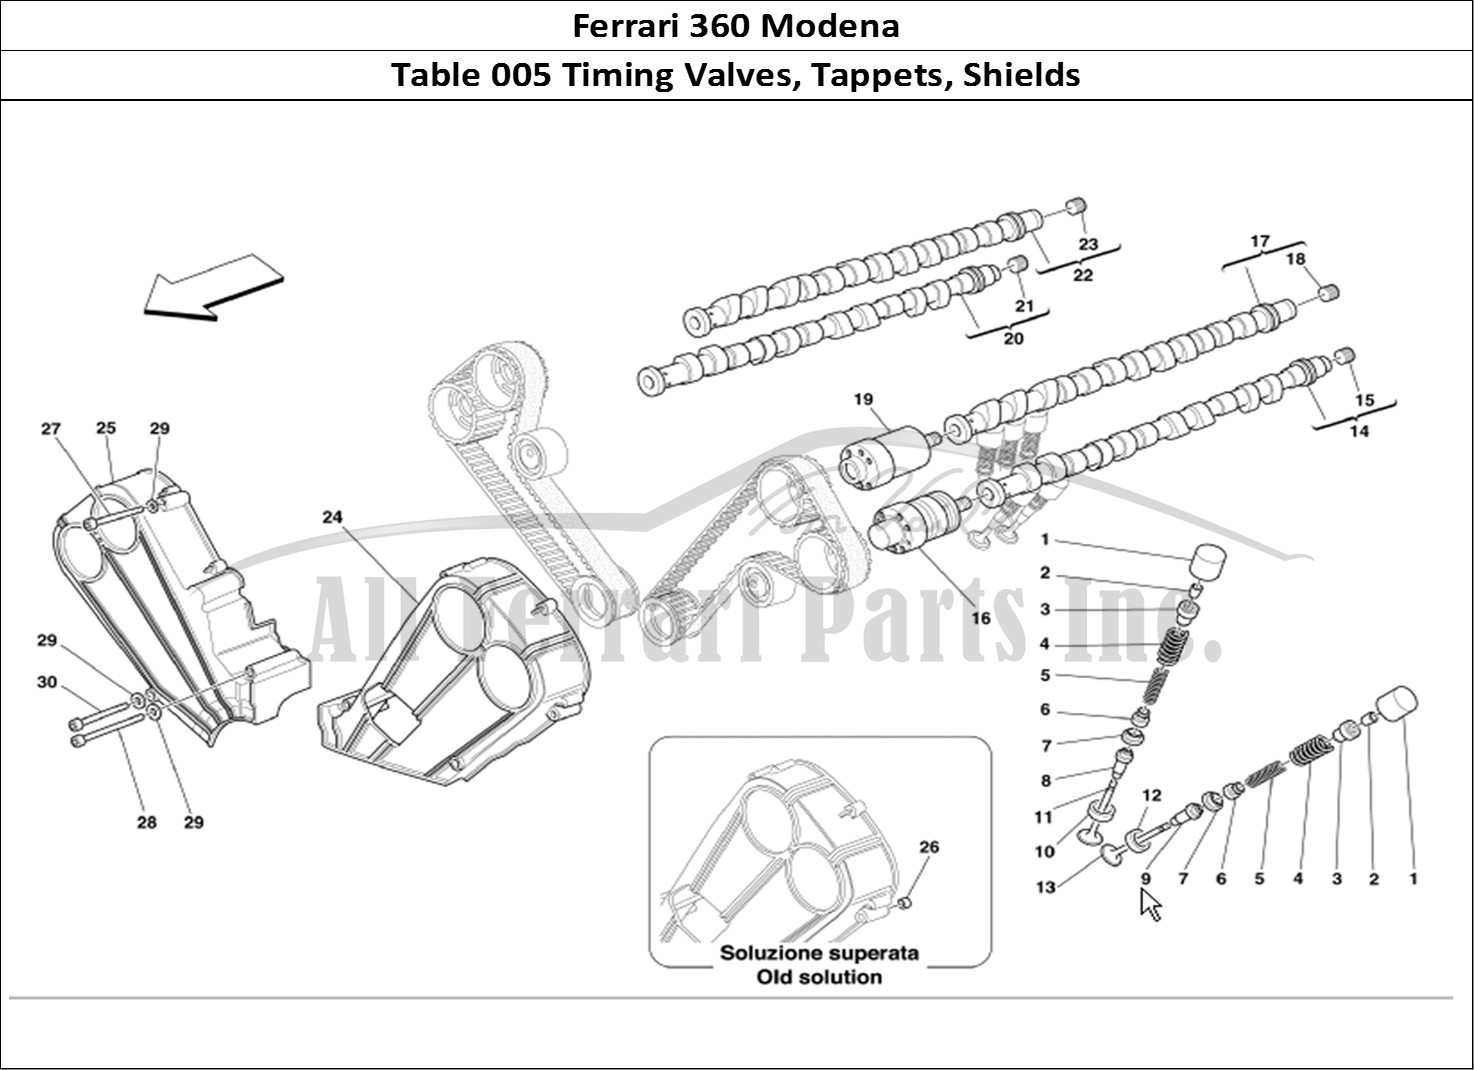 Ferrari Parts Ferrari 360 Modena Page 005 Timing Tappets and Shield